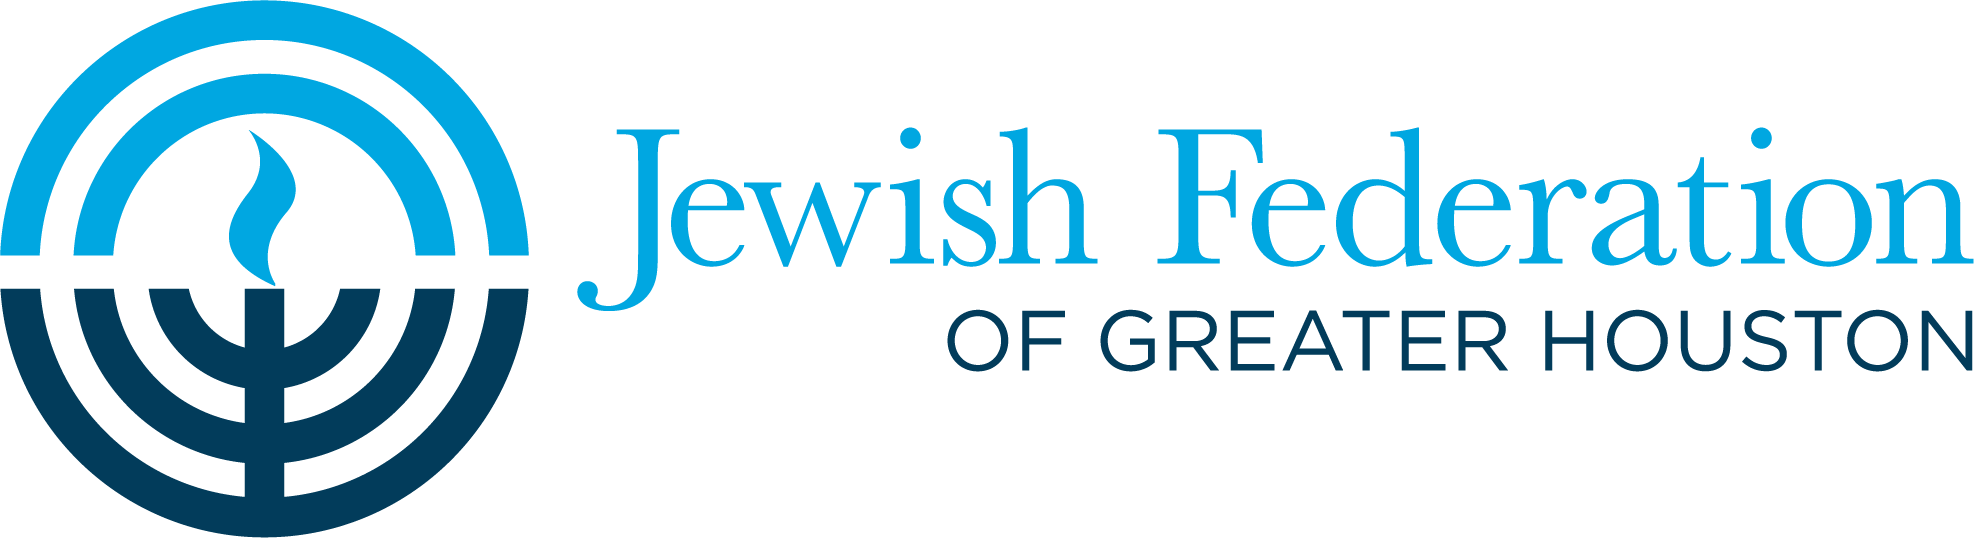 The Jewish Federation of Greater Houston - logo